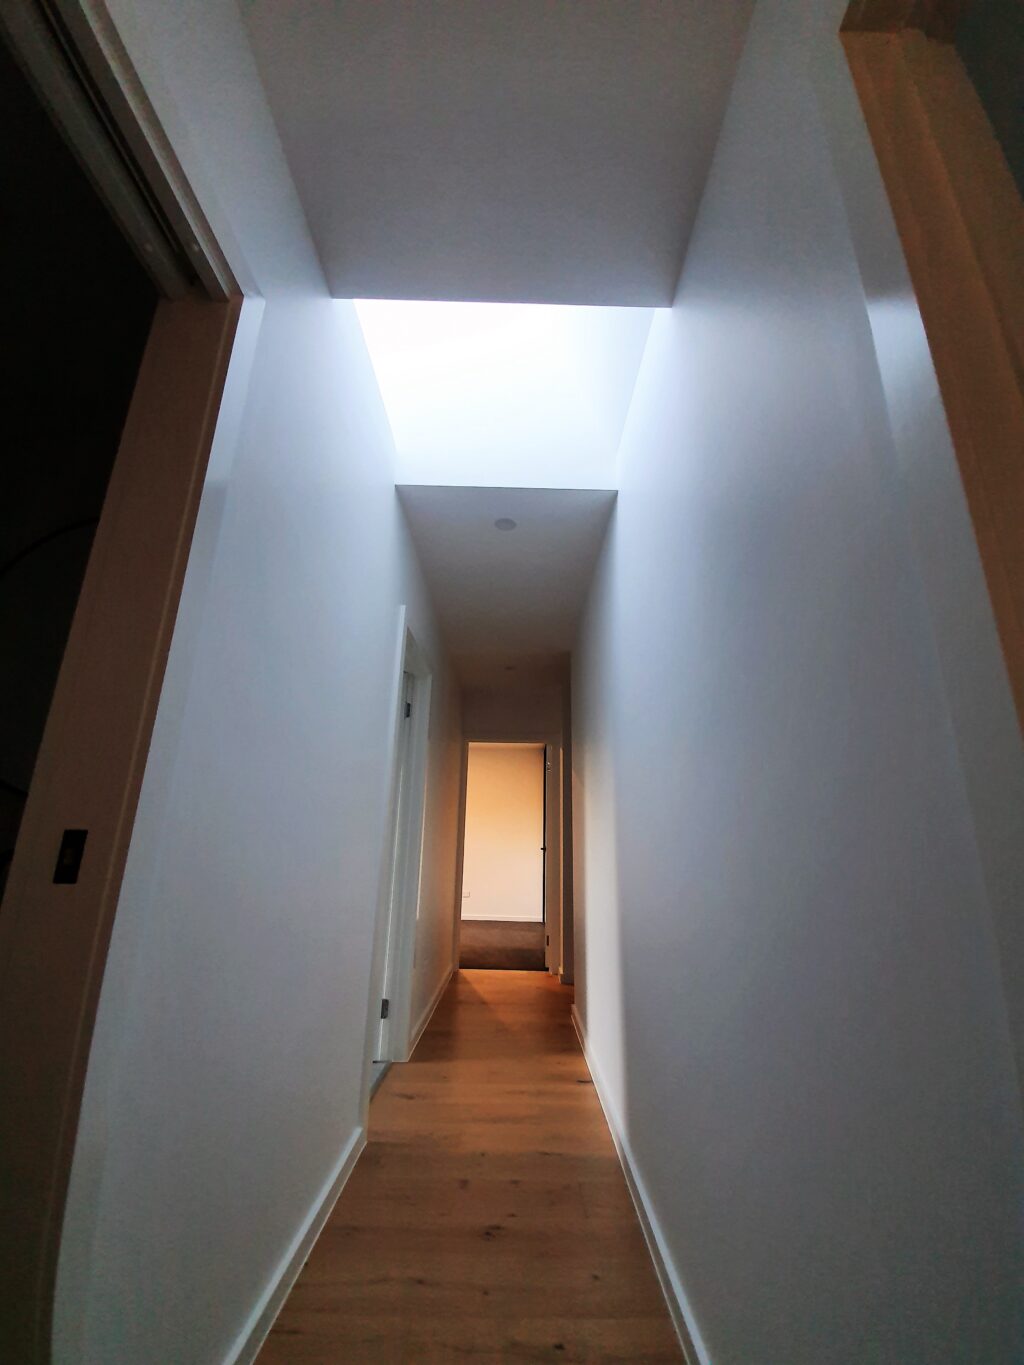 Hallway skylight shaft